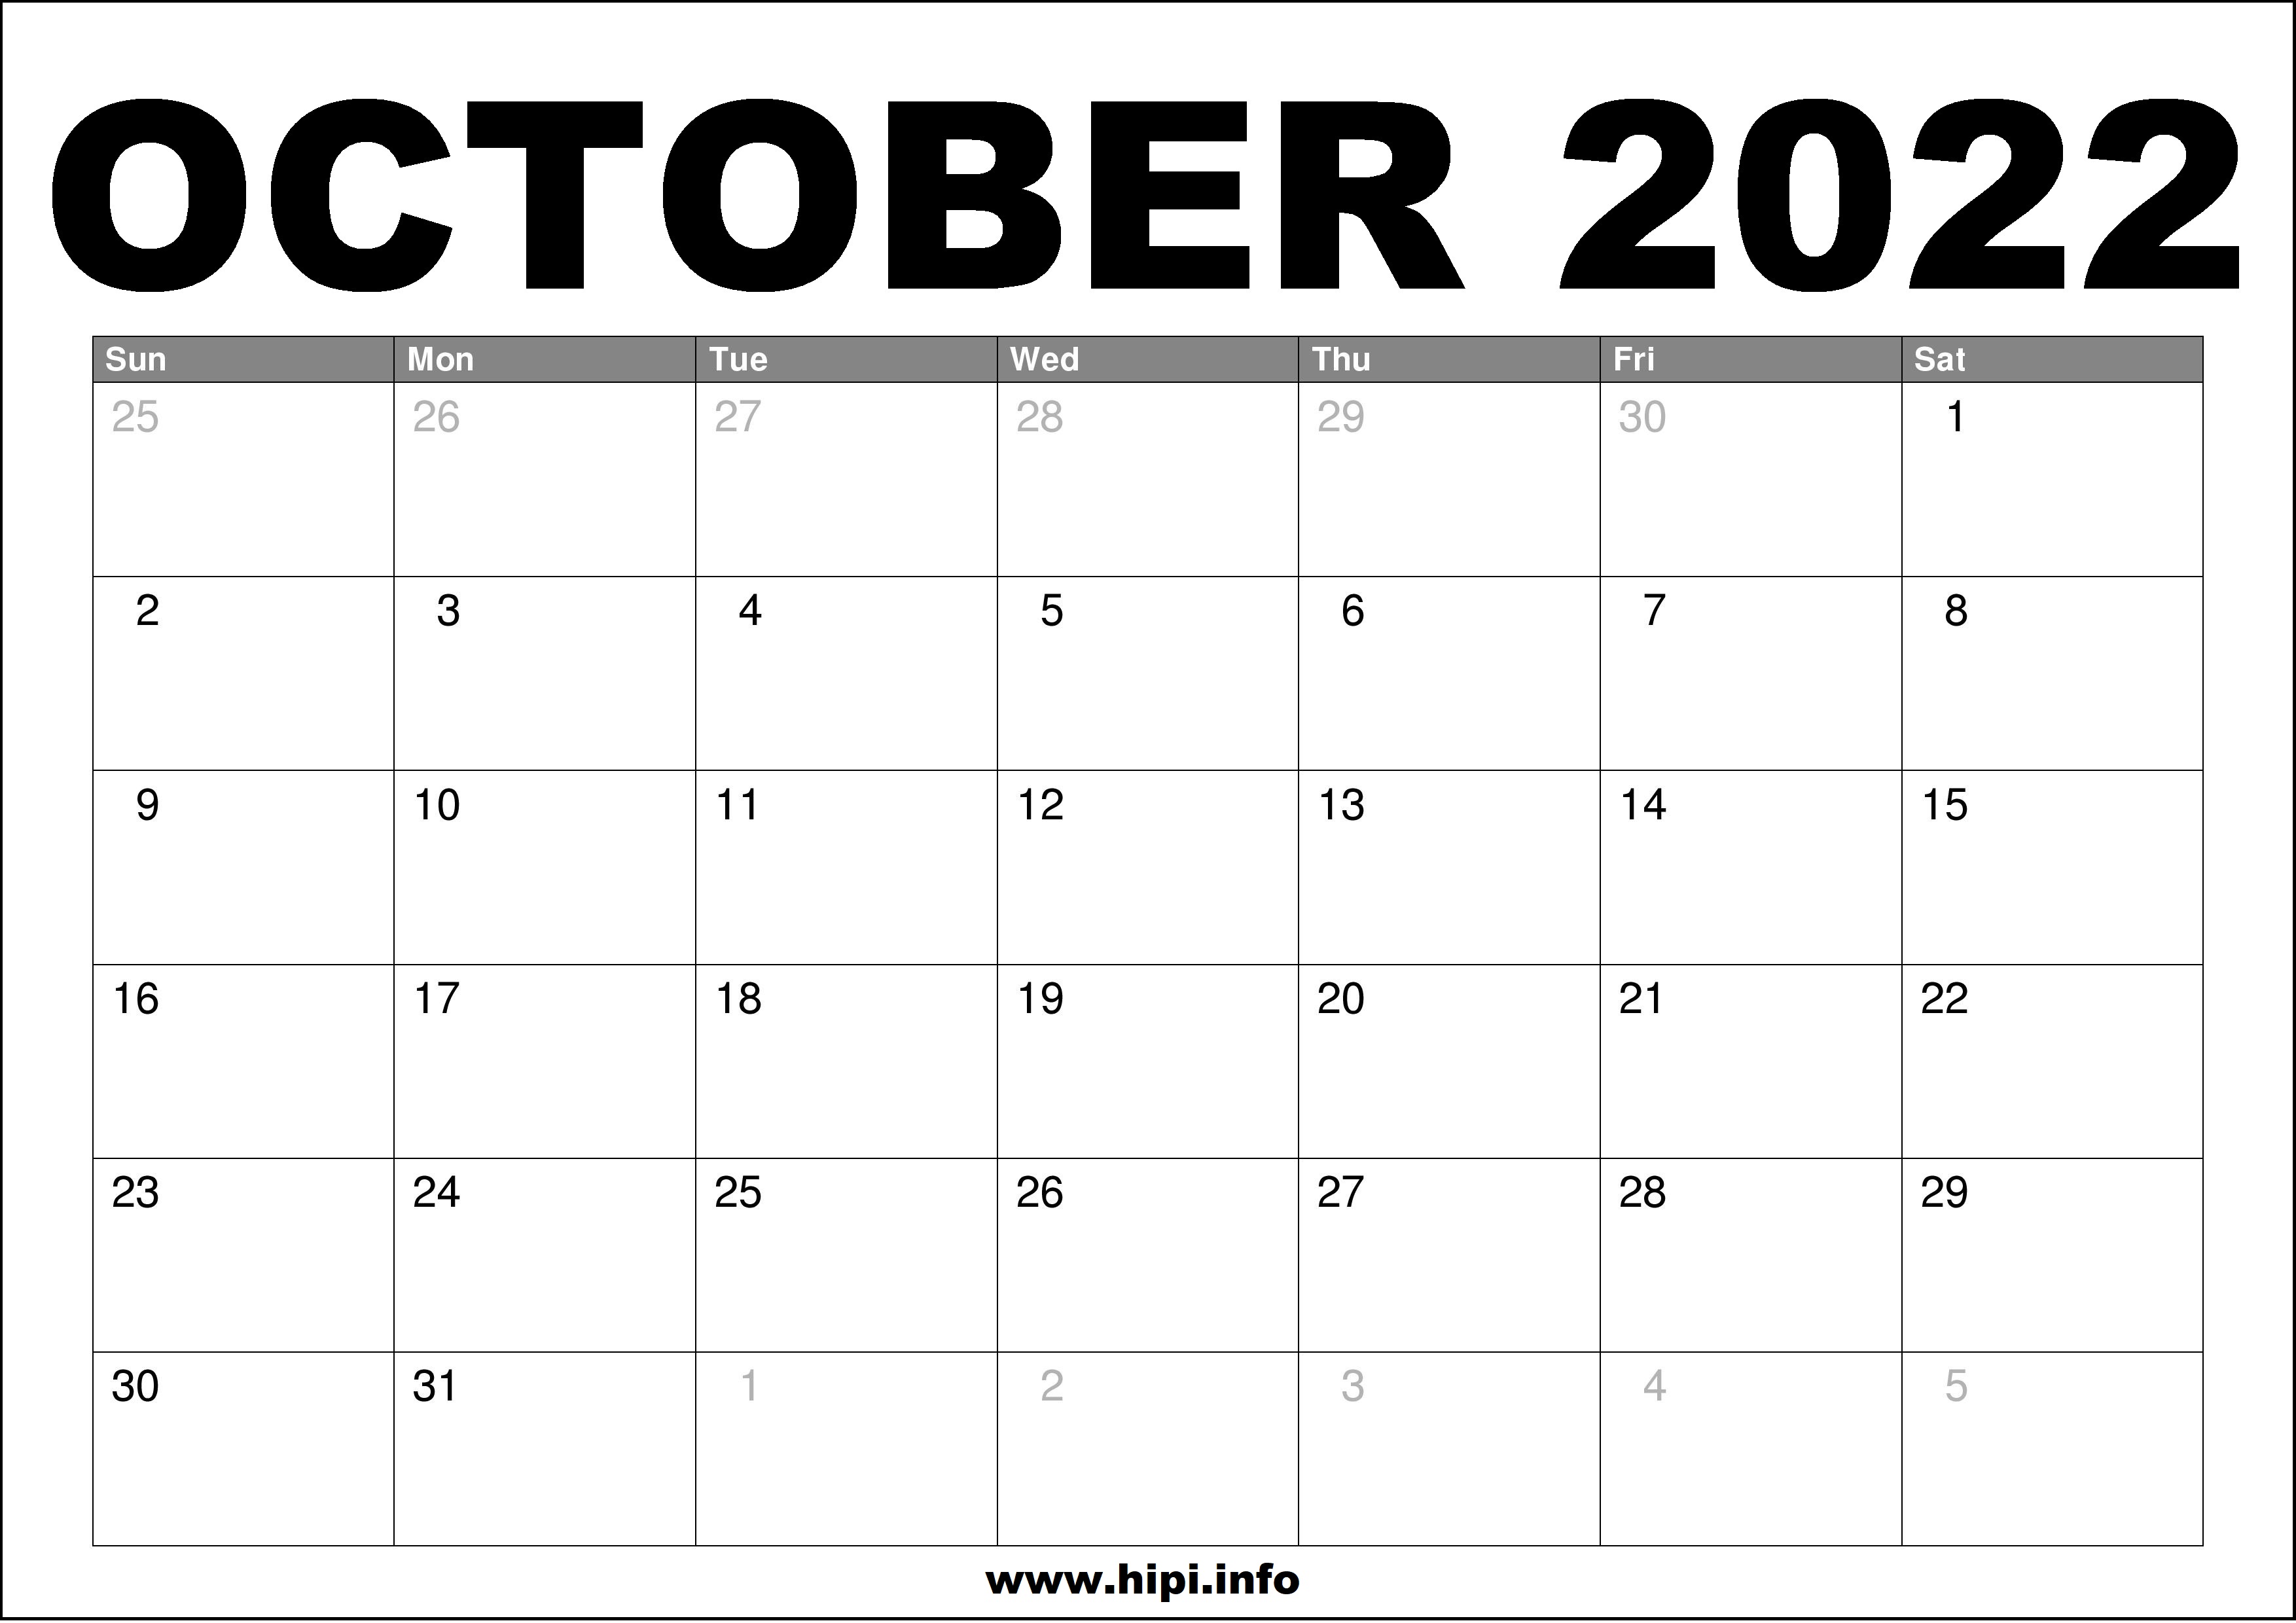 October 2022 Calendar Images October 2022 Calendar Printable Free - Hipi.info | Calendars Printable Free